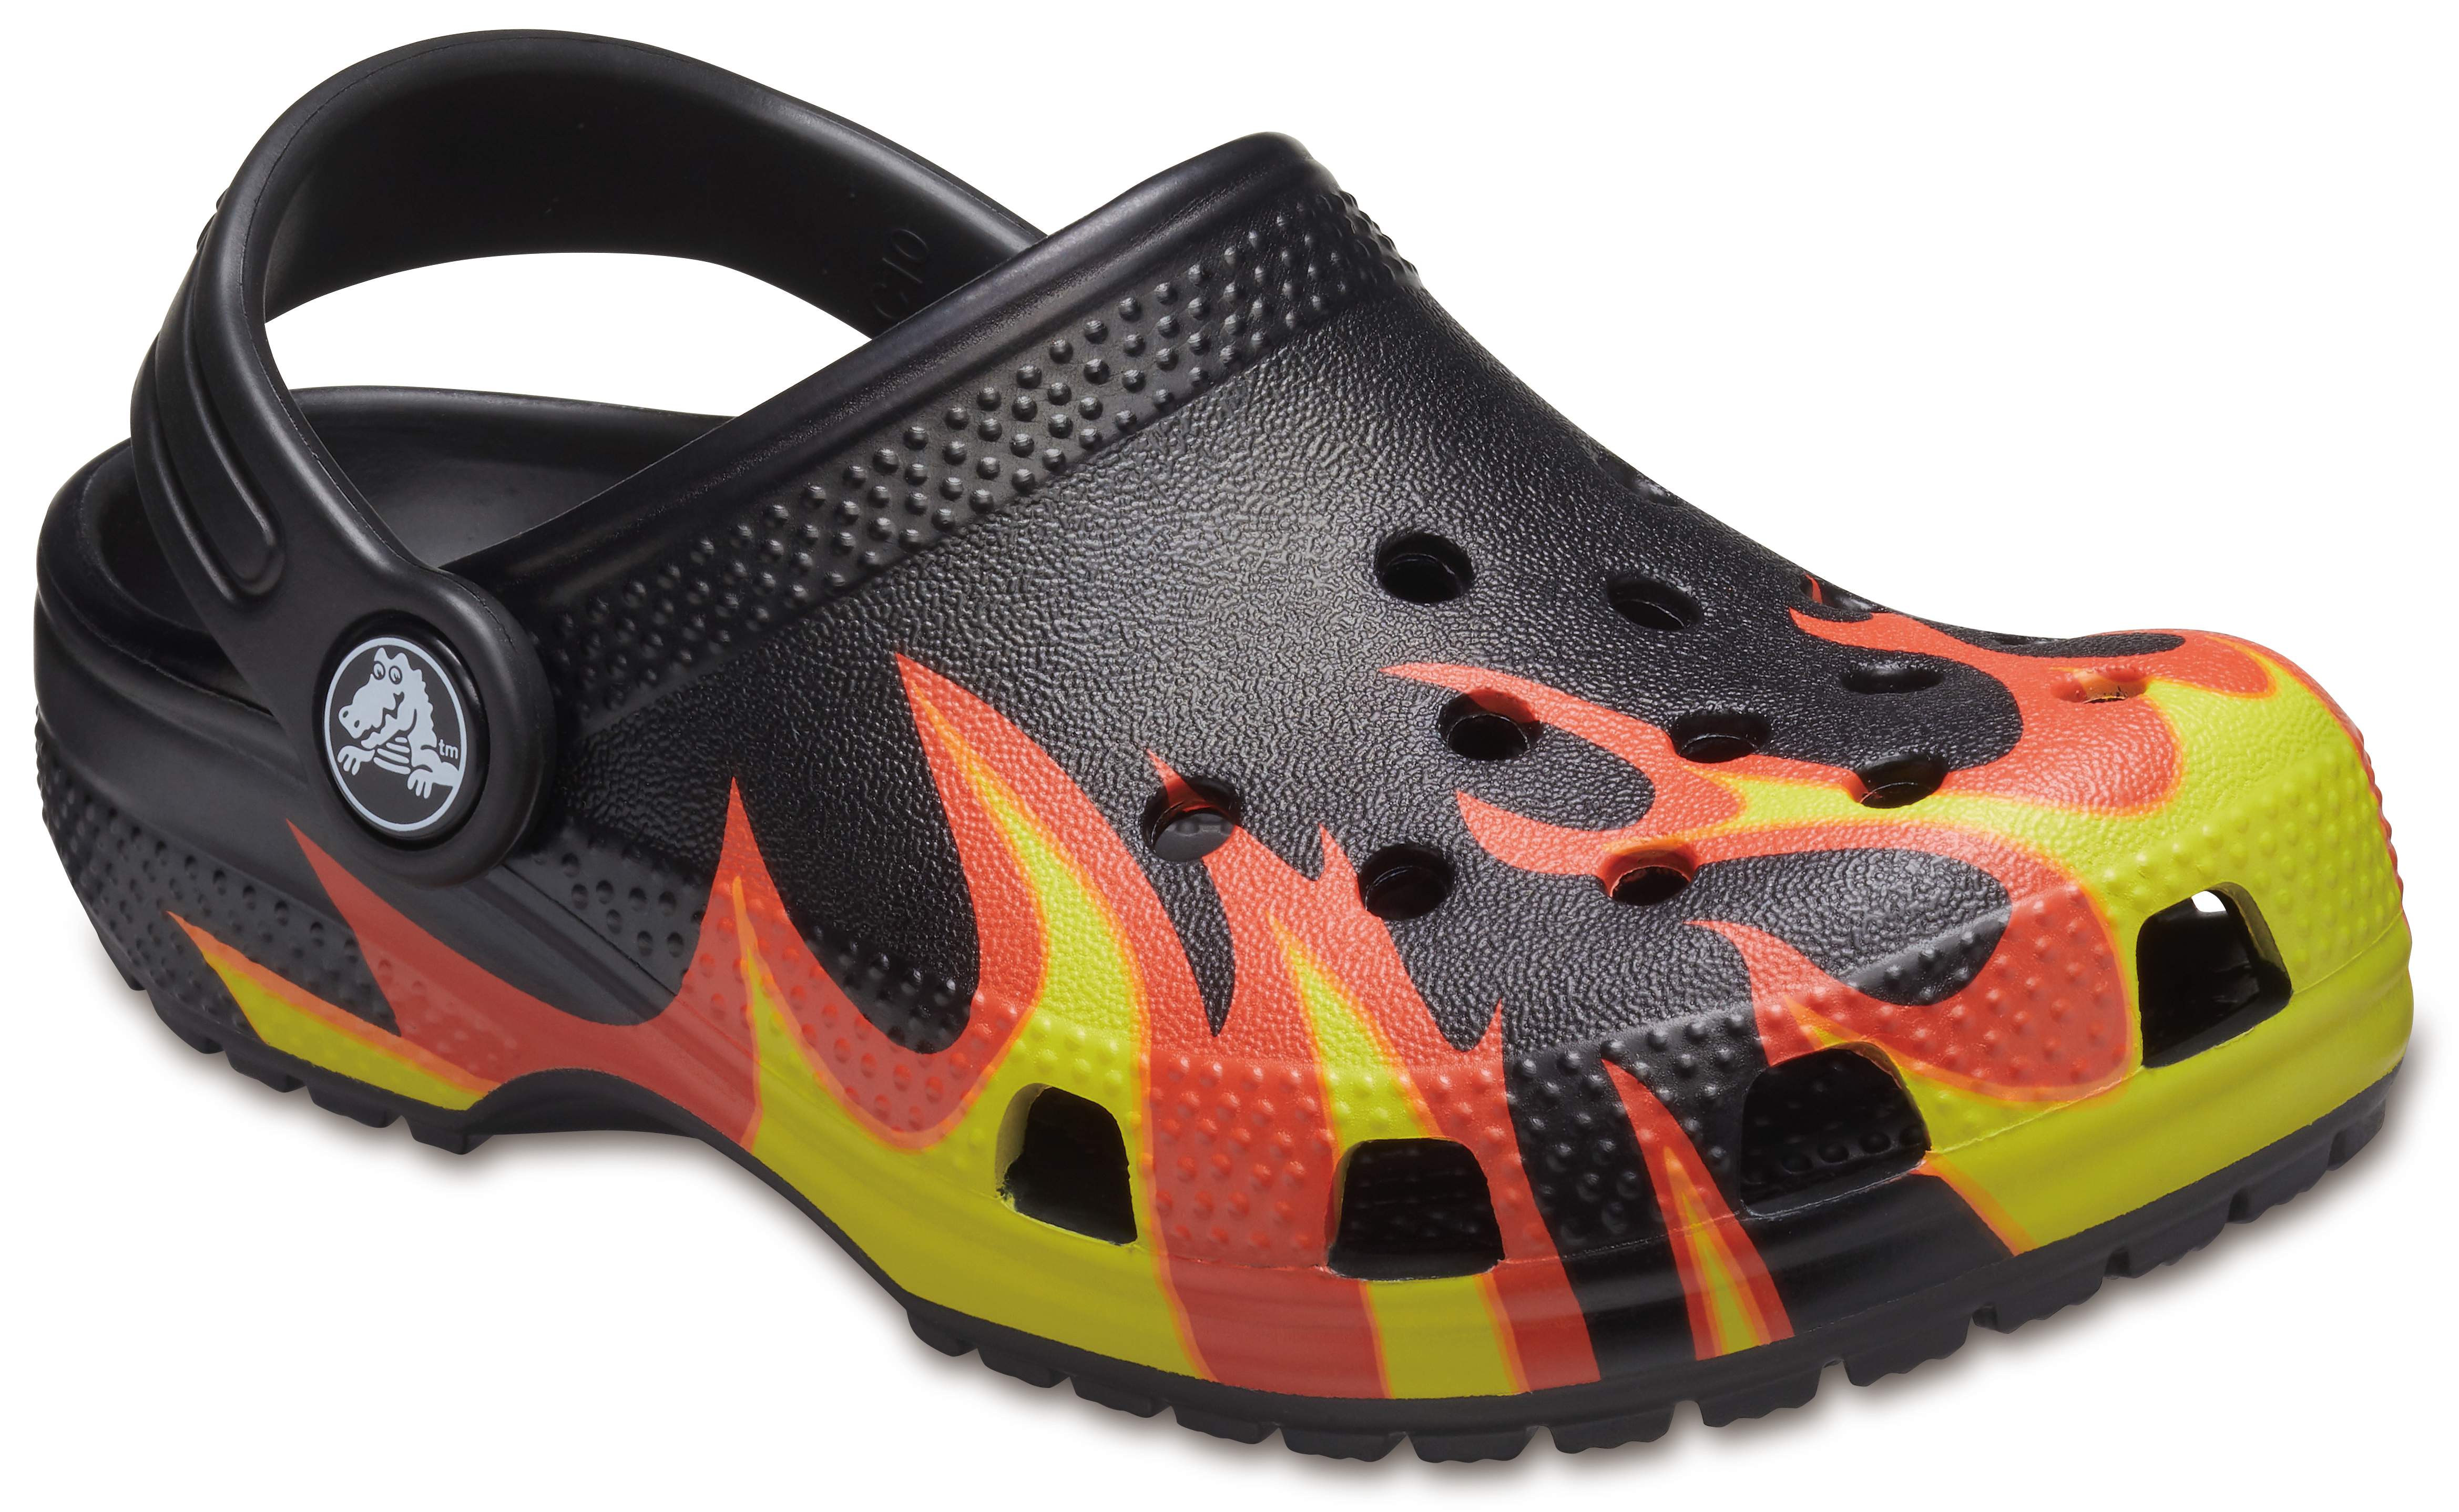 black crocs with flames